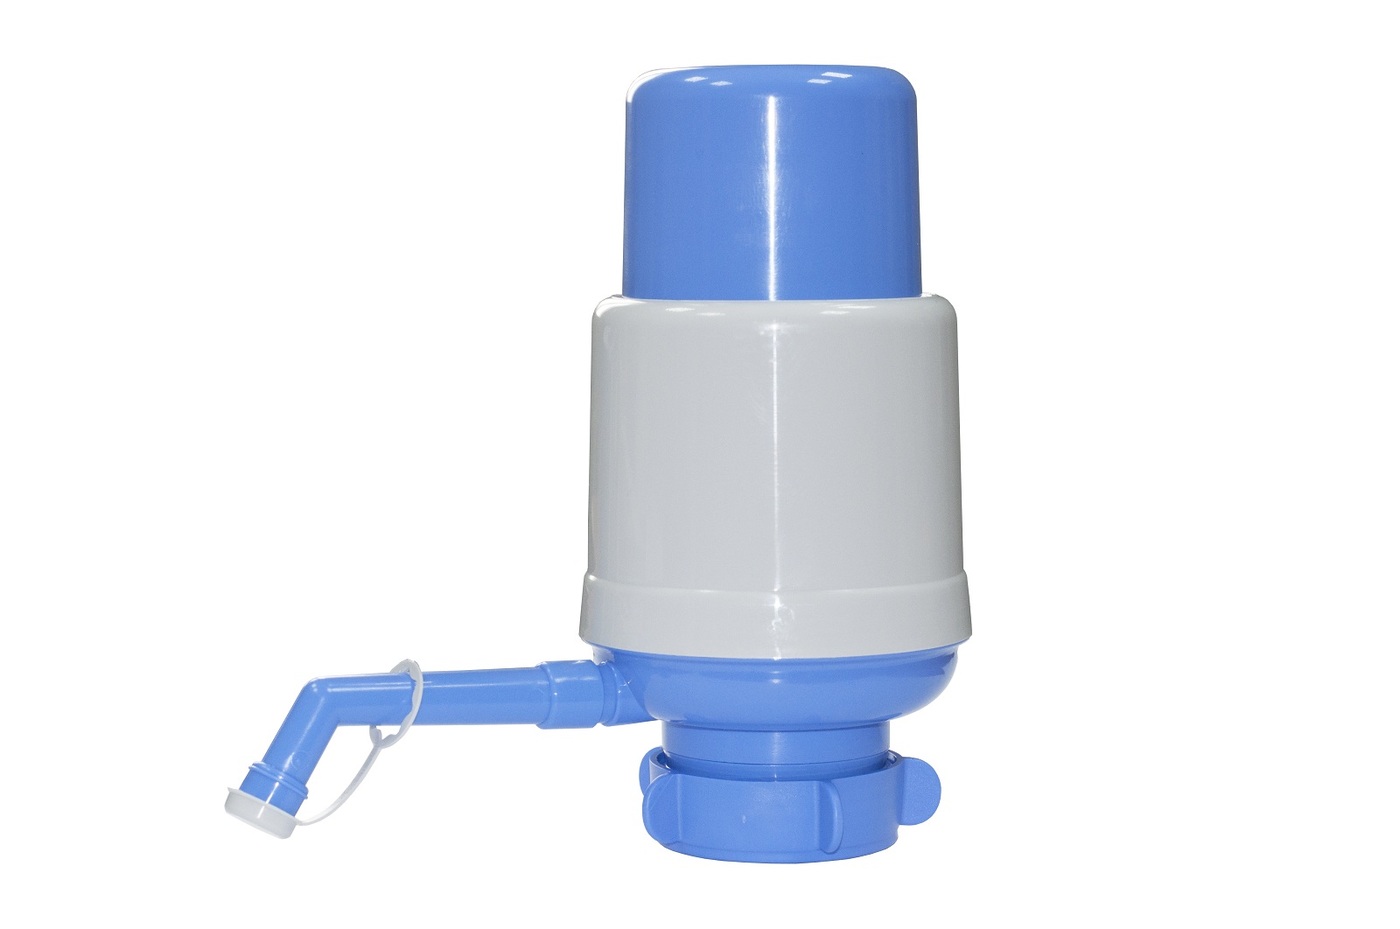 Вода помпа спб. Помпа для воды SMIXX Standard. Помпа механическая кулера SMIXX. Механическая помпа для воды Lilu Standart. Механическая помпа для воды (на 19л бутыль) AEL (аел).